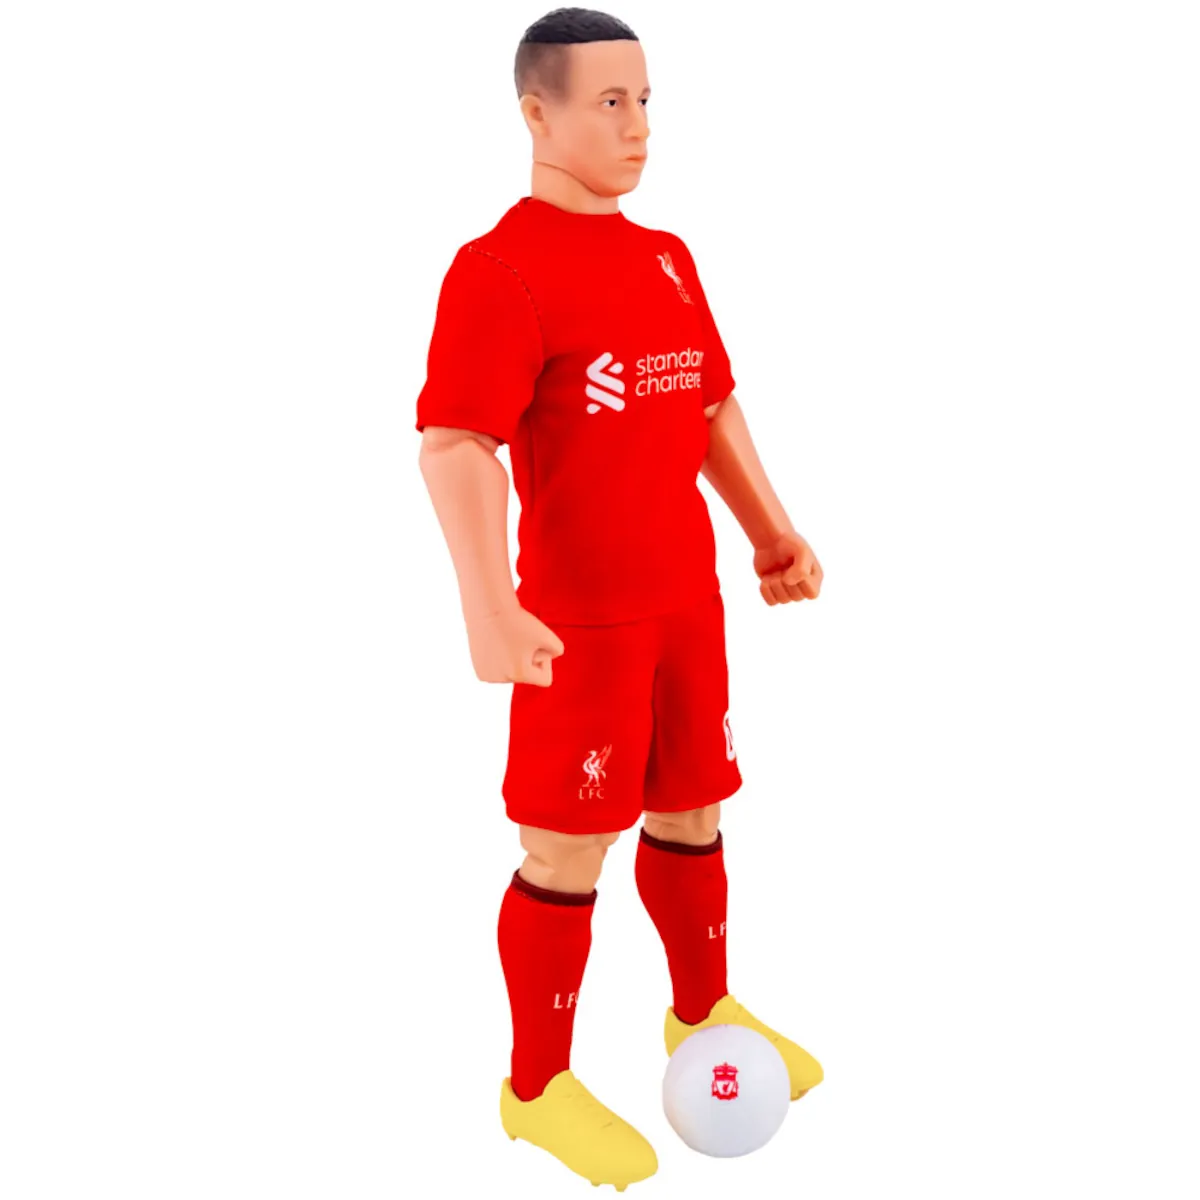 TM-03856 Liverpool FC Thiago Alcântara 30cm Action Figure 2